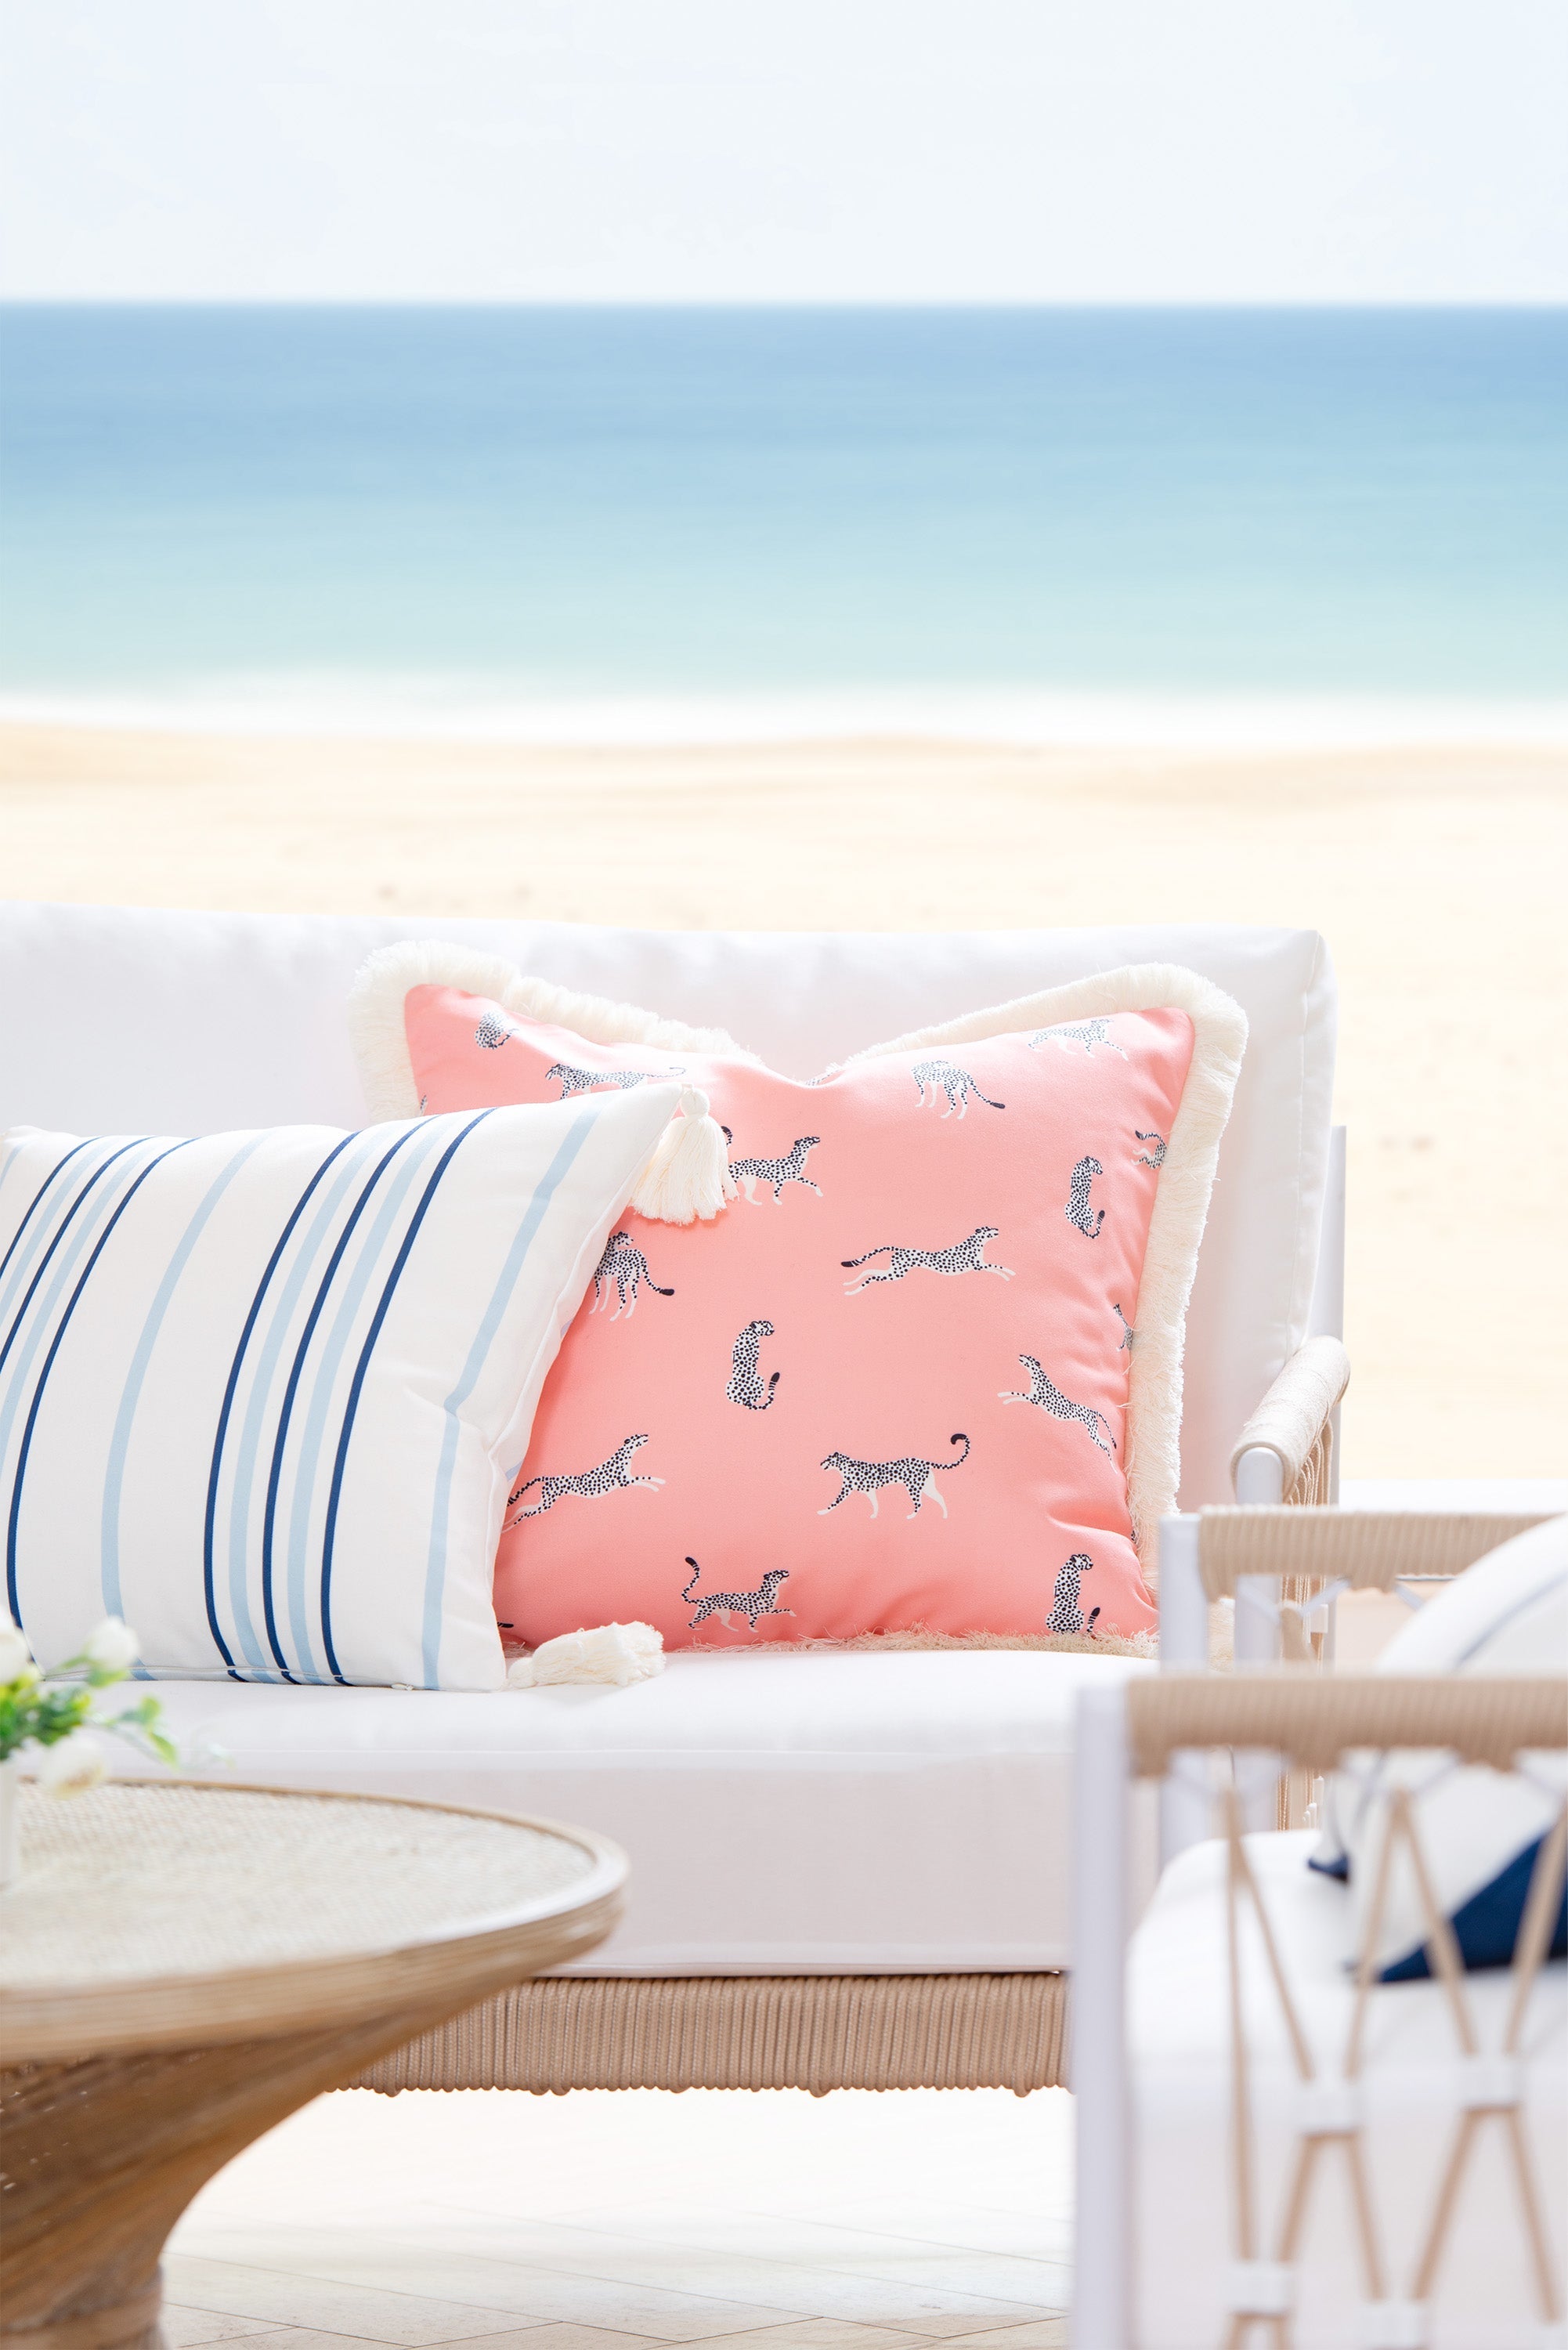 Tropical Indoor Outdoor Pillow Cover, Leopard Fringe, Pink, 20"x20"